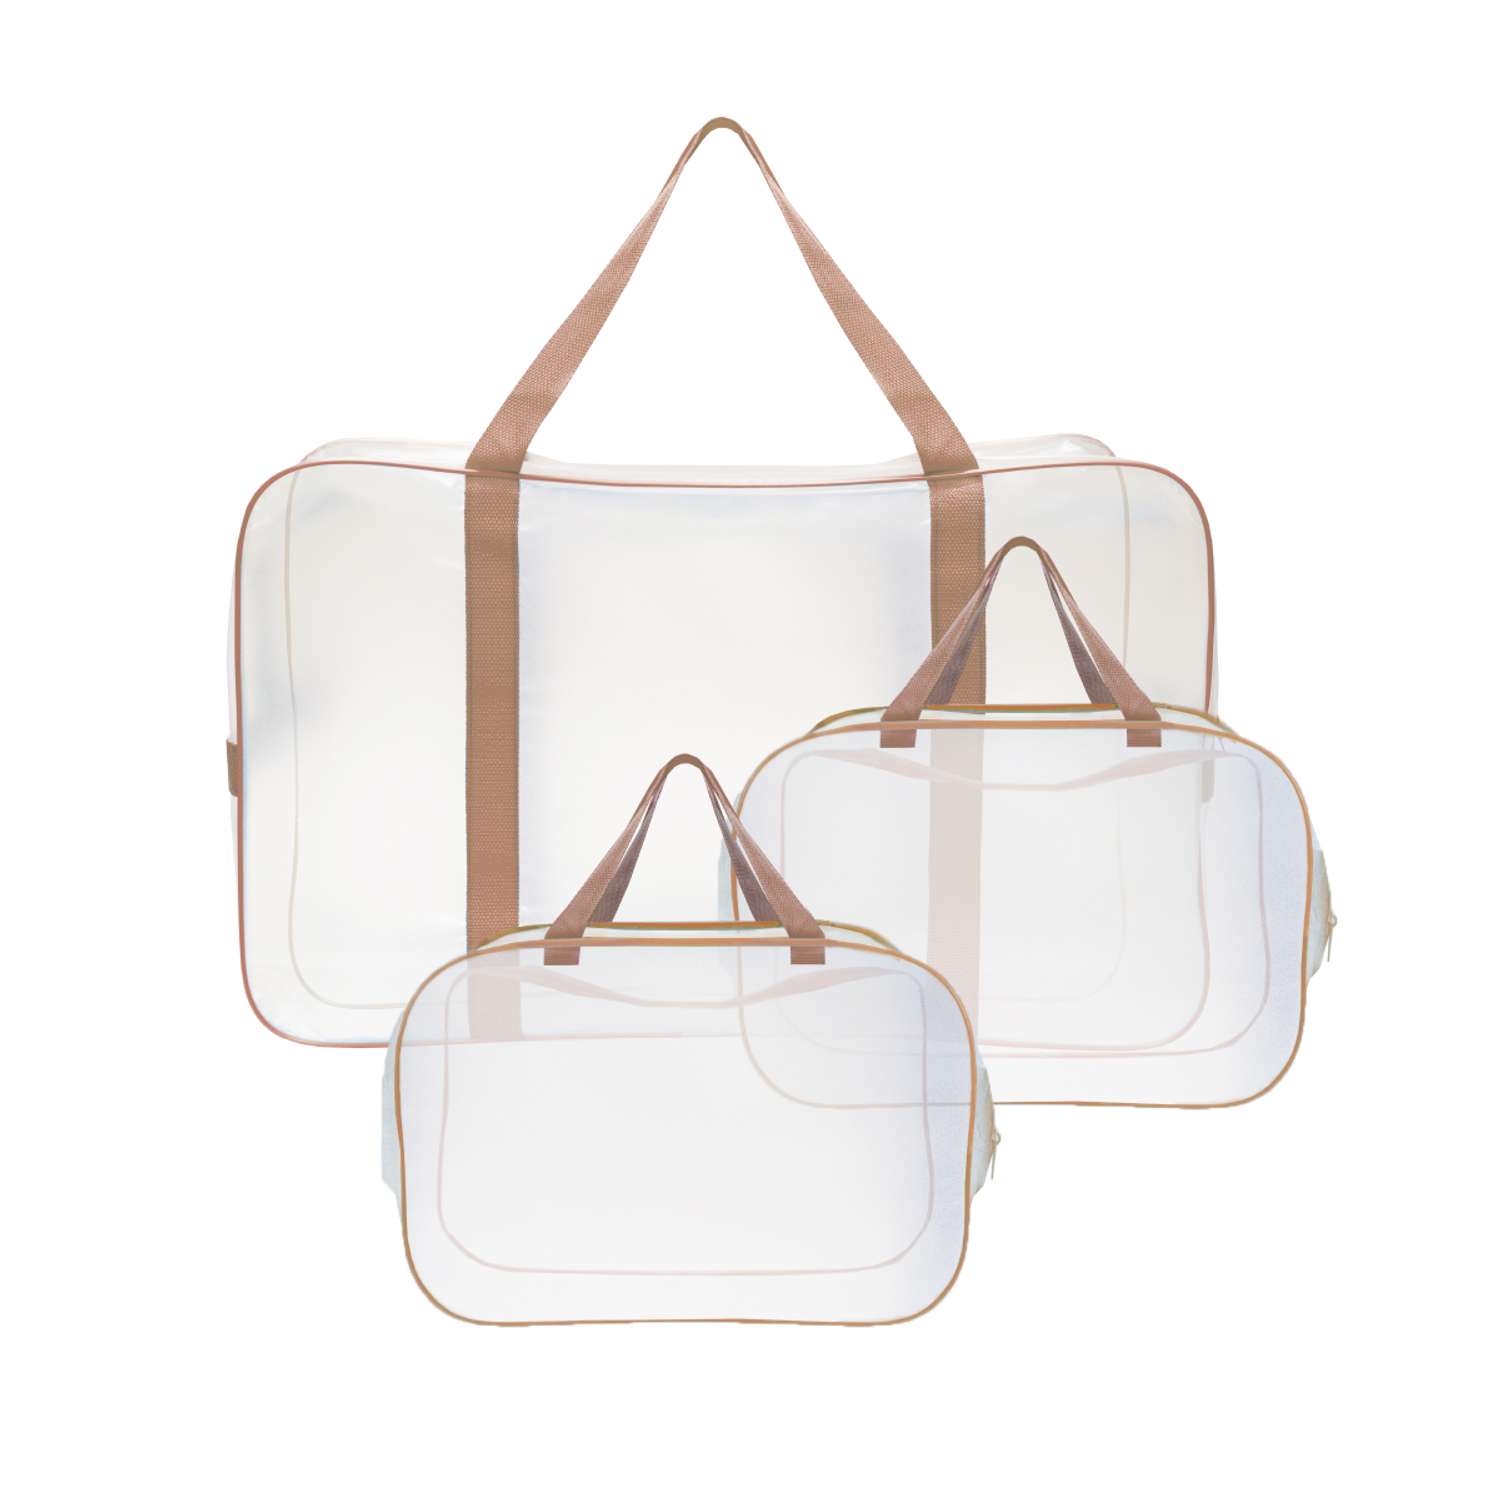 Набор для роддома ForBaby прозрачные сумки 3 шт - бежевый цвет - фото 1